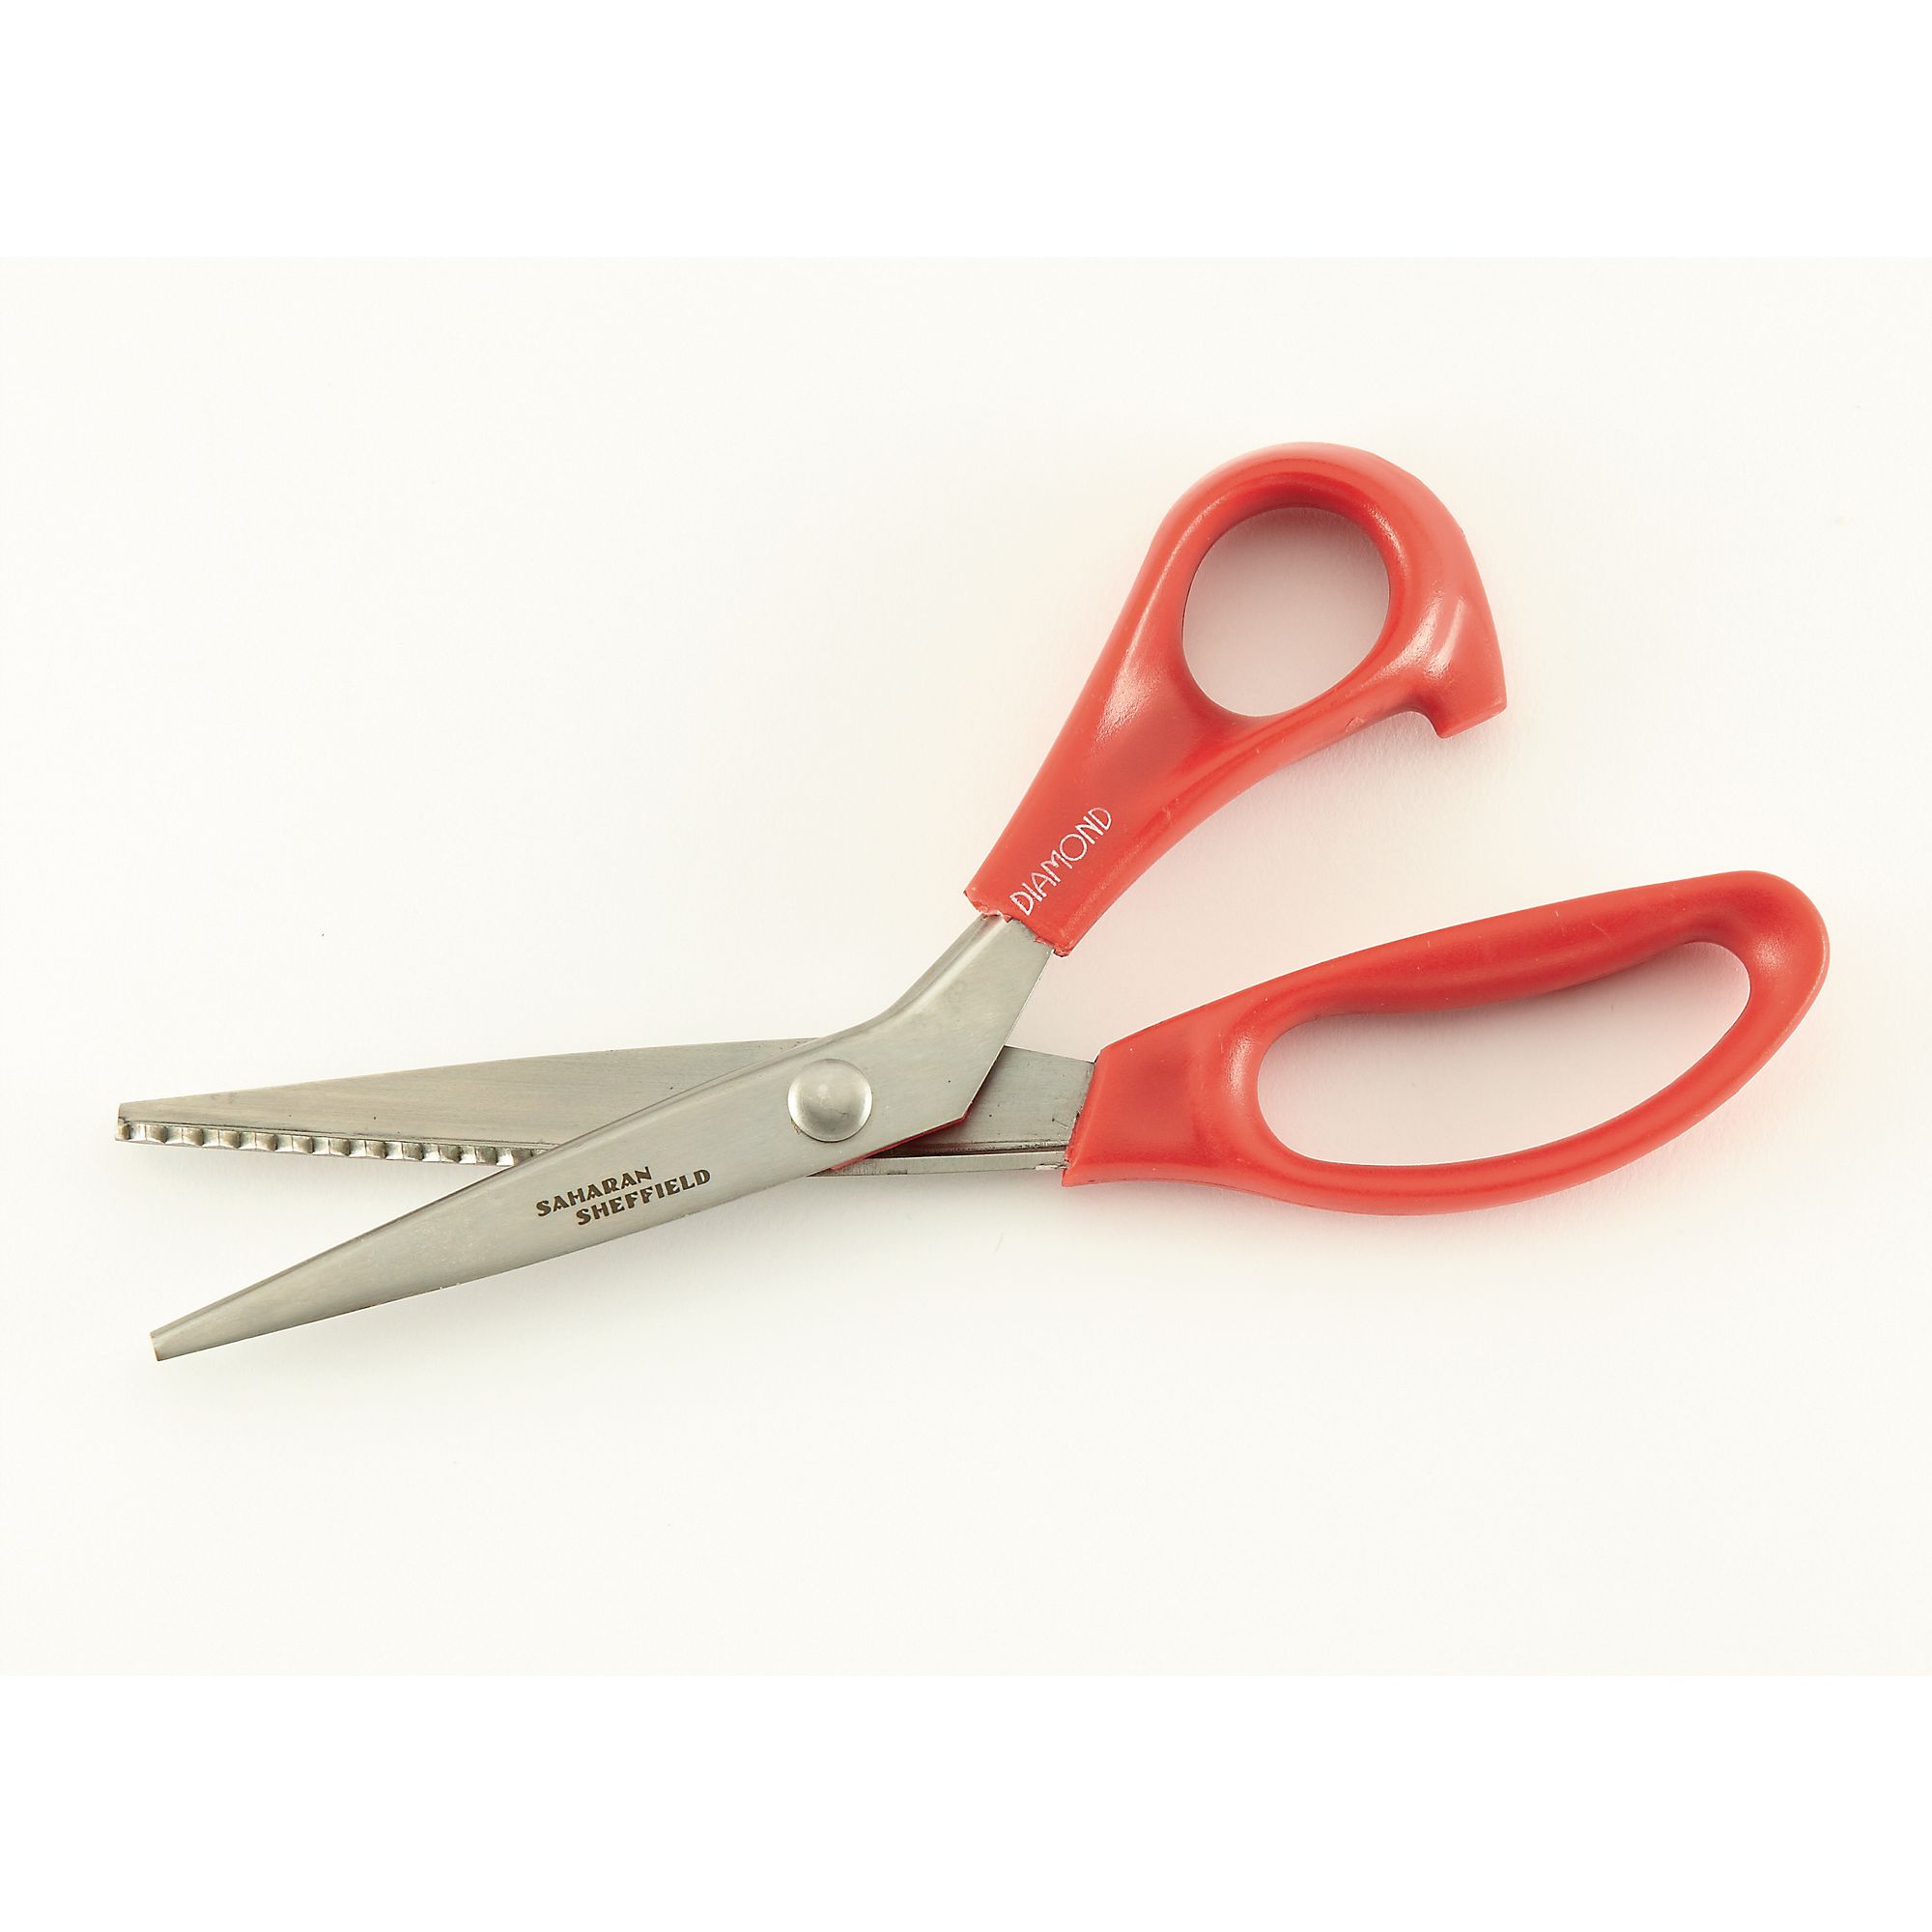 scissors pinking shear